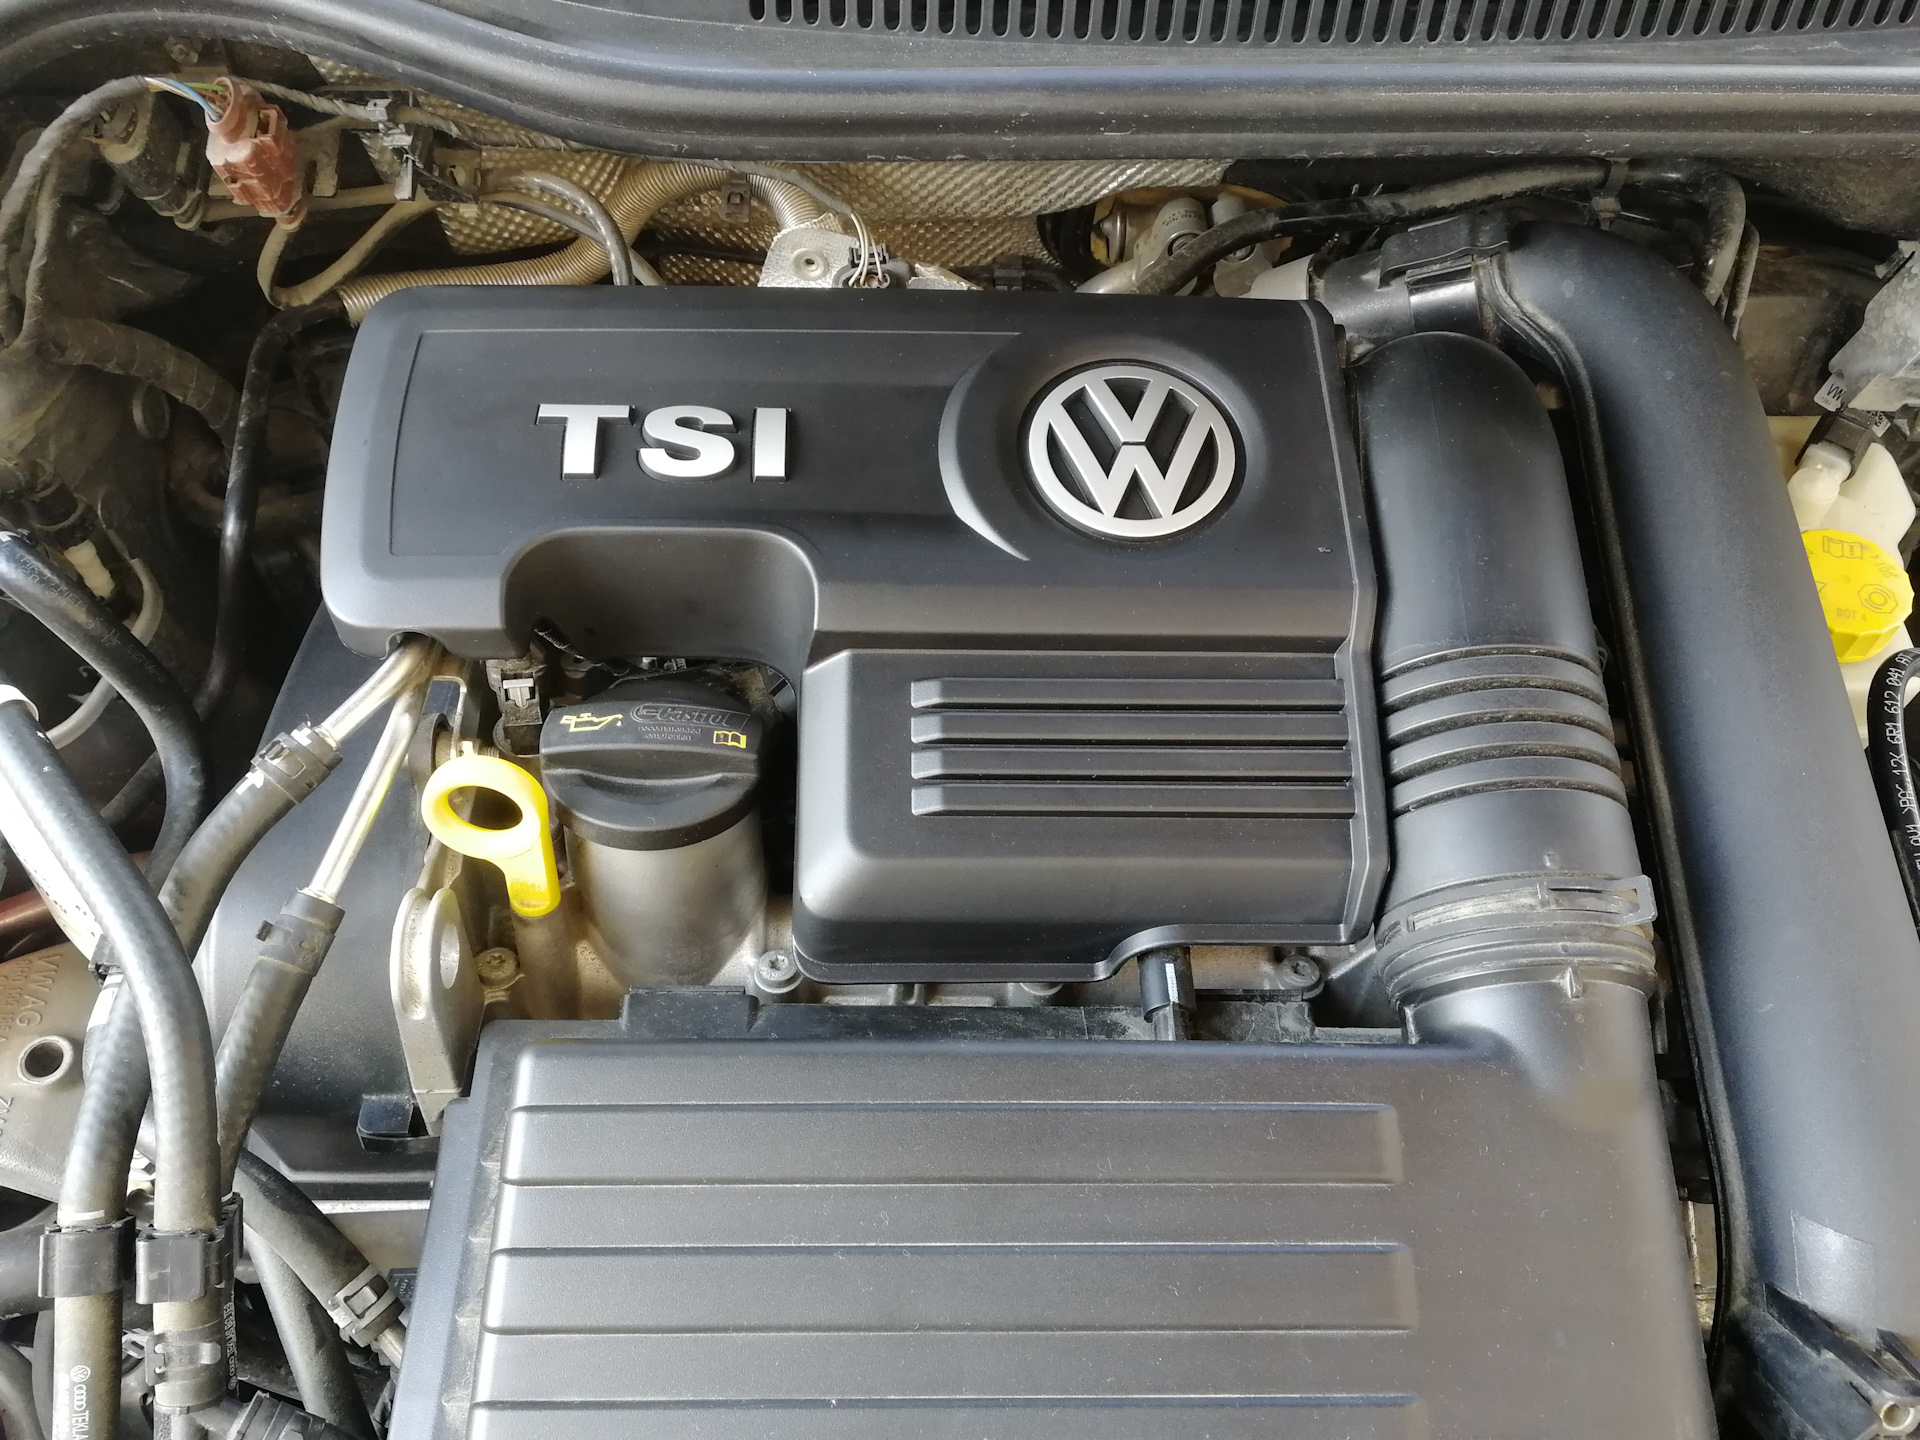 Volkswagen Polo 1.4 крышка мотора. Крышка двигателя Volkswagen 2.0TSI. Крышка на двигатель Фольксваген поло седан 1.6.